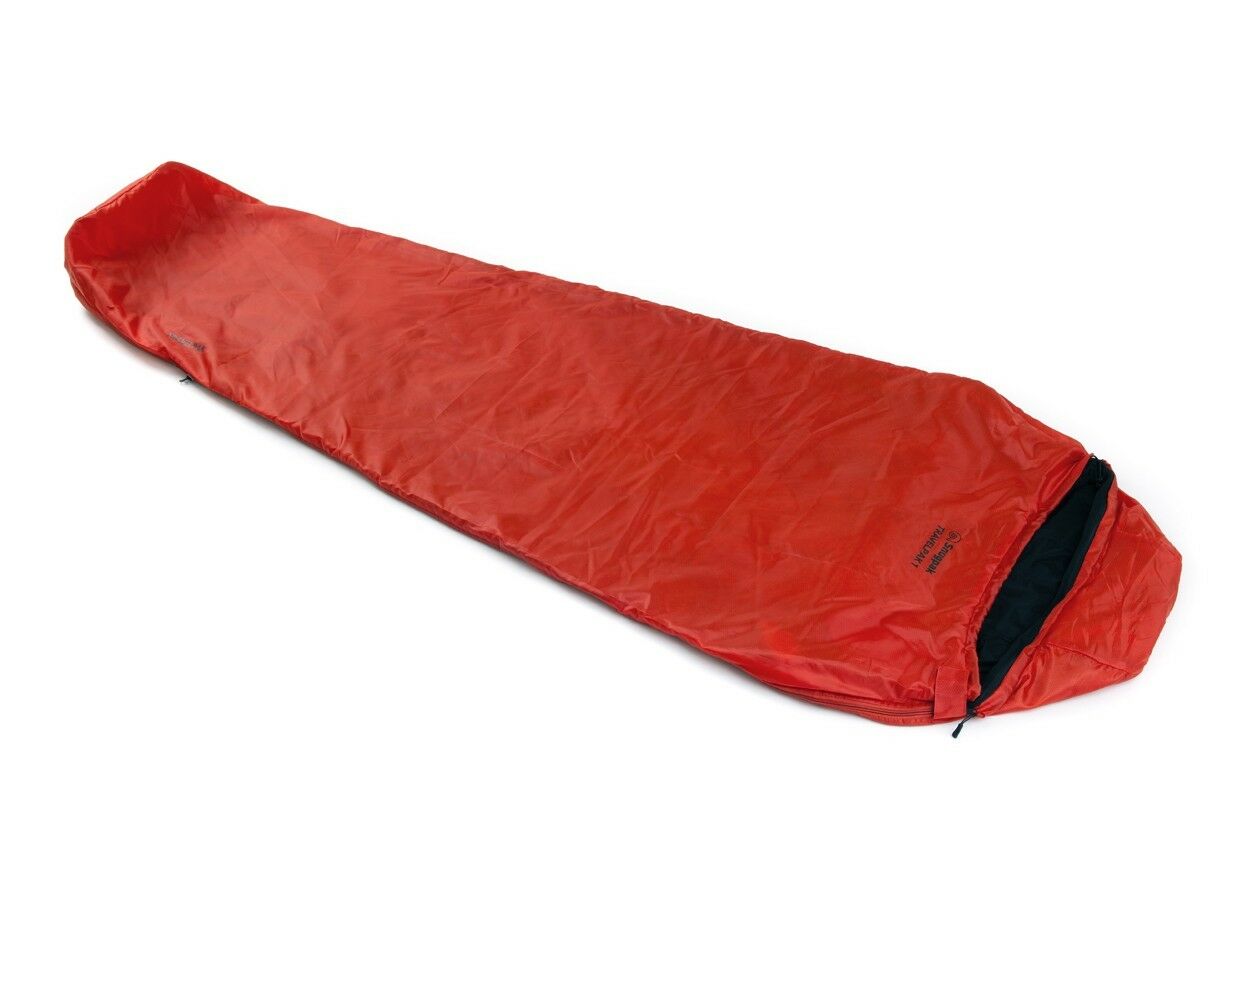 Snugpak Travelpak 1 Sleeping Bag (Flame Red)